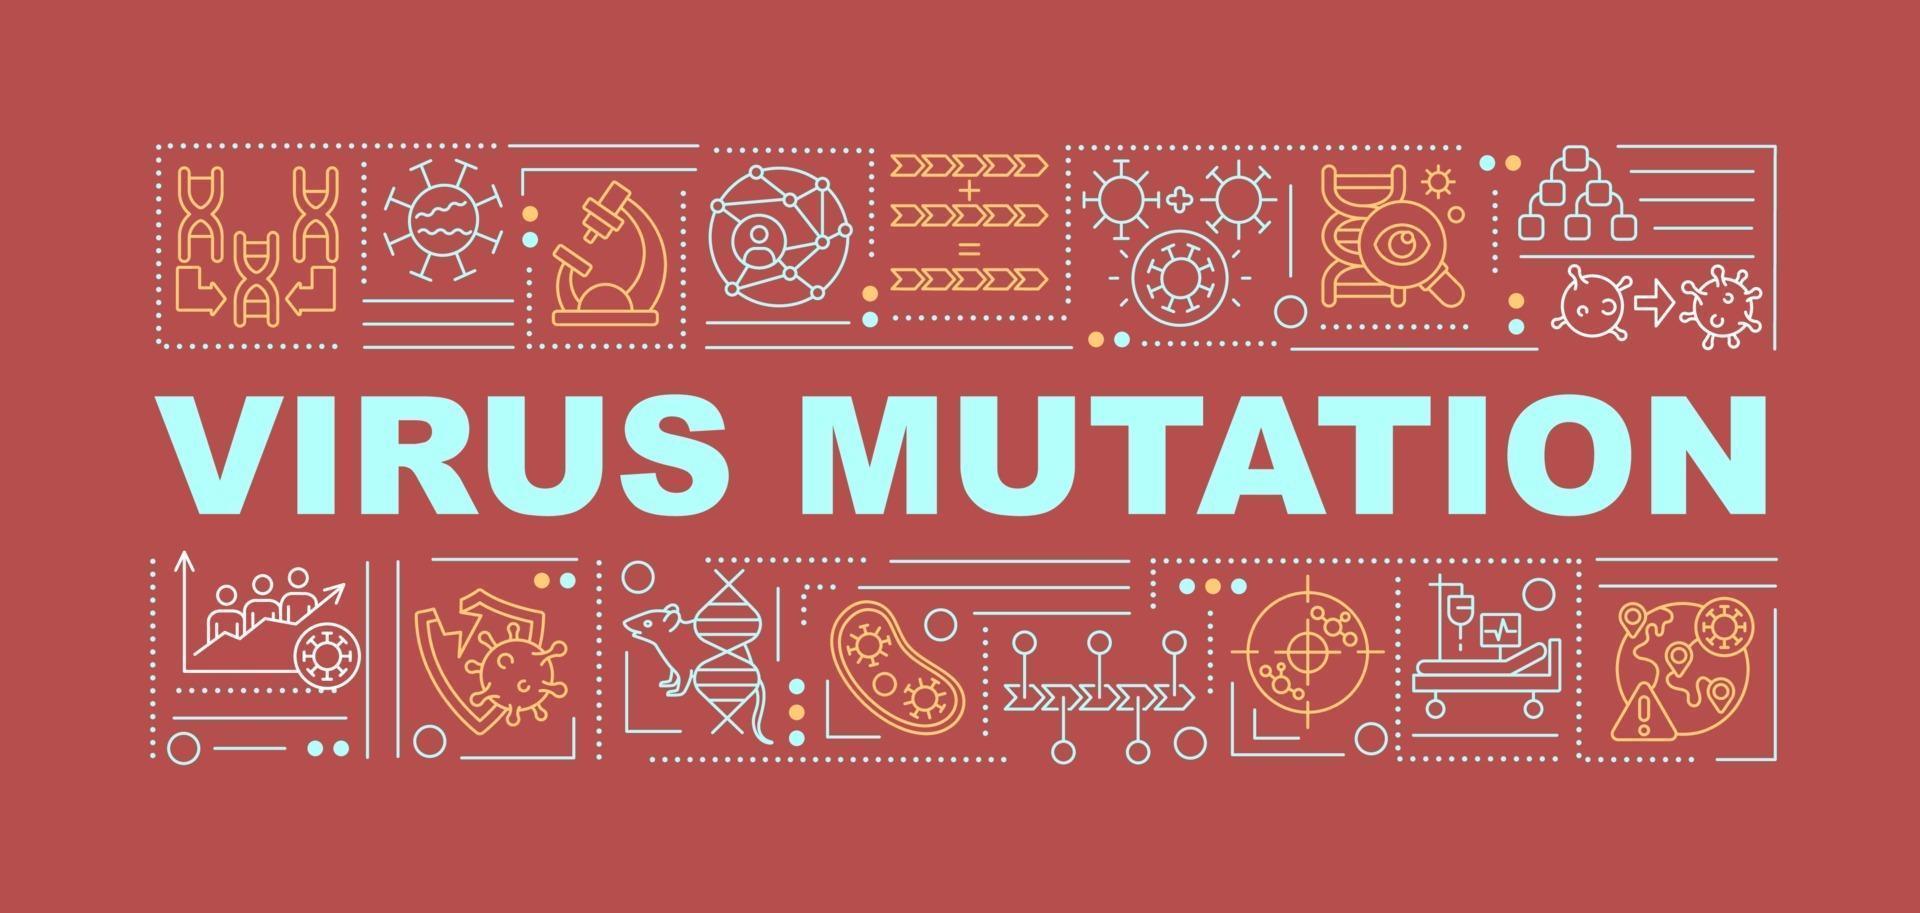 Virus mutation word concepts banner vector